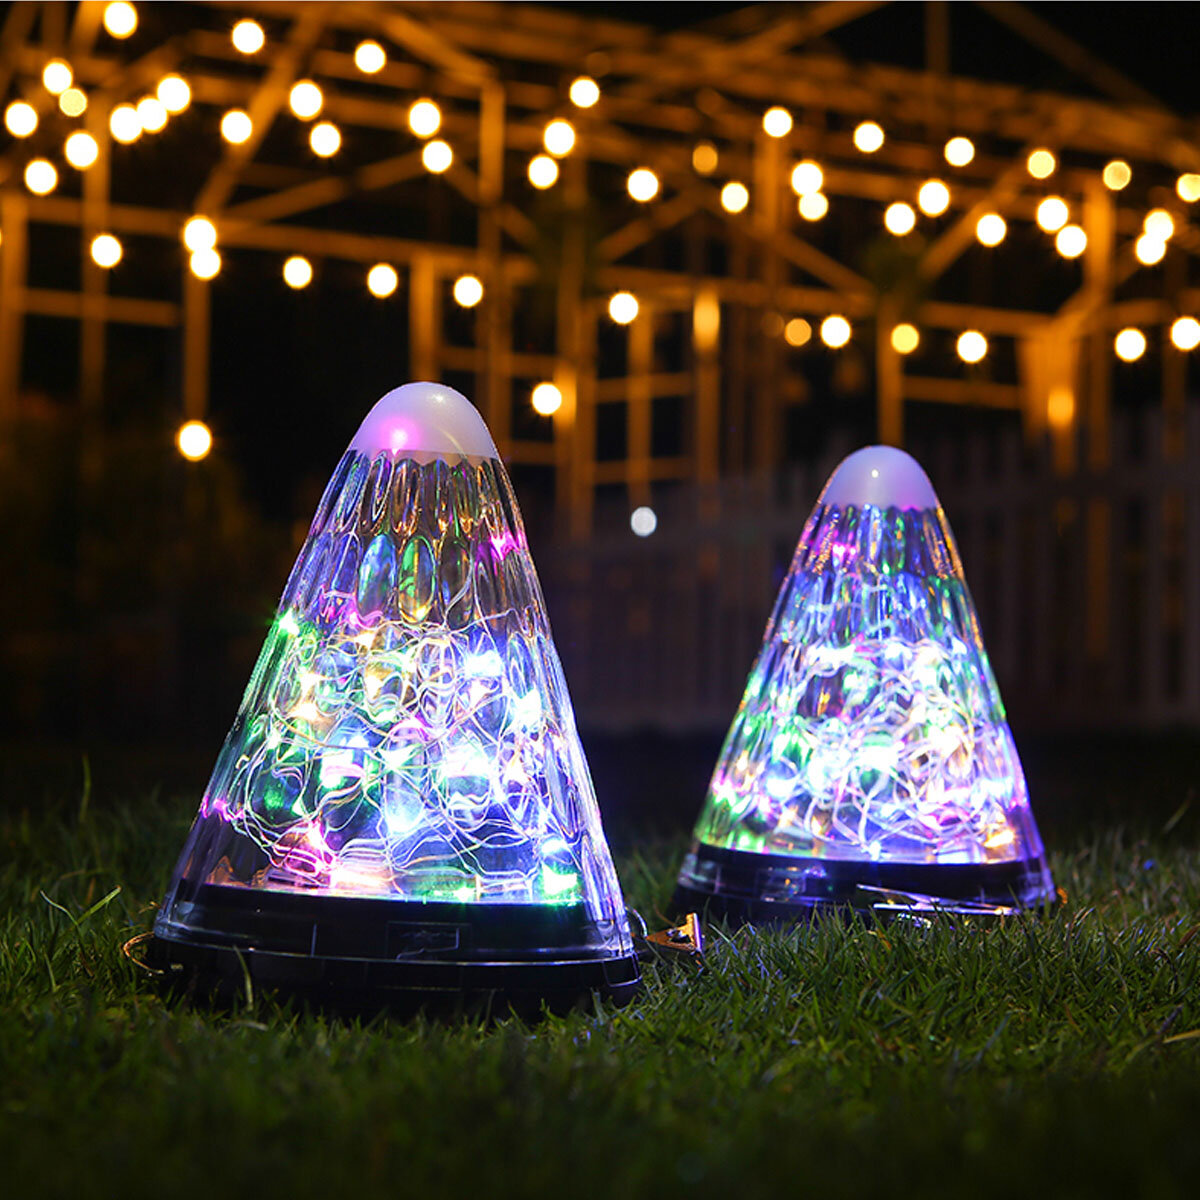 Windgong Zonne-energie LED Licht Veranderende Hangende Tuin Yard Outdoor Decor